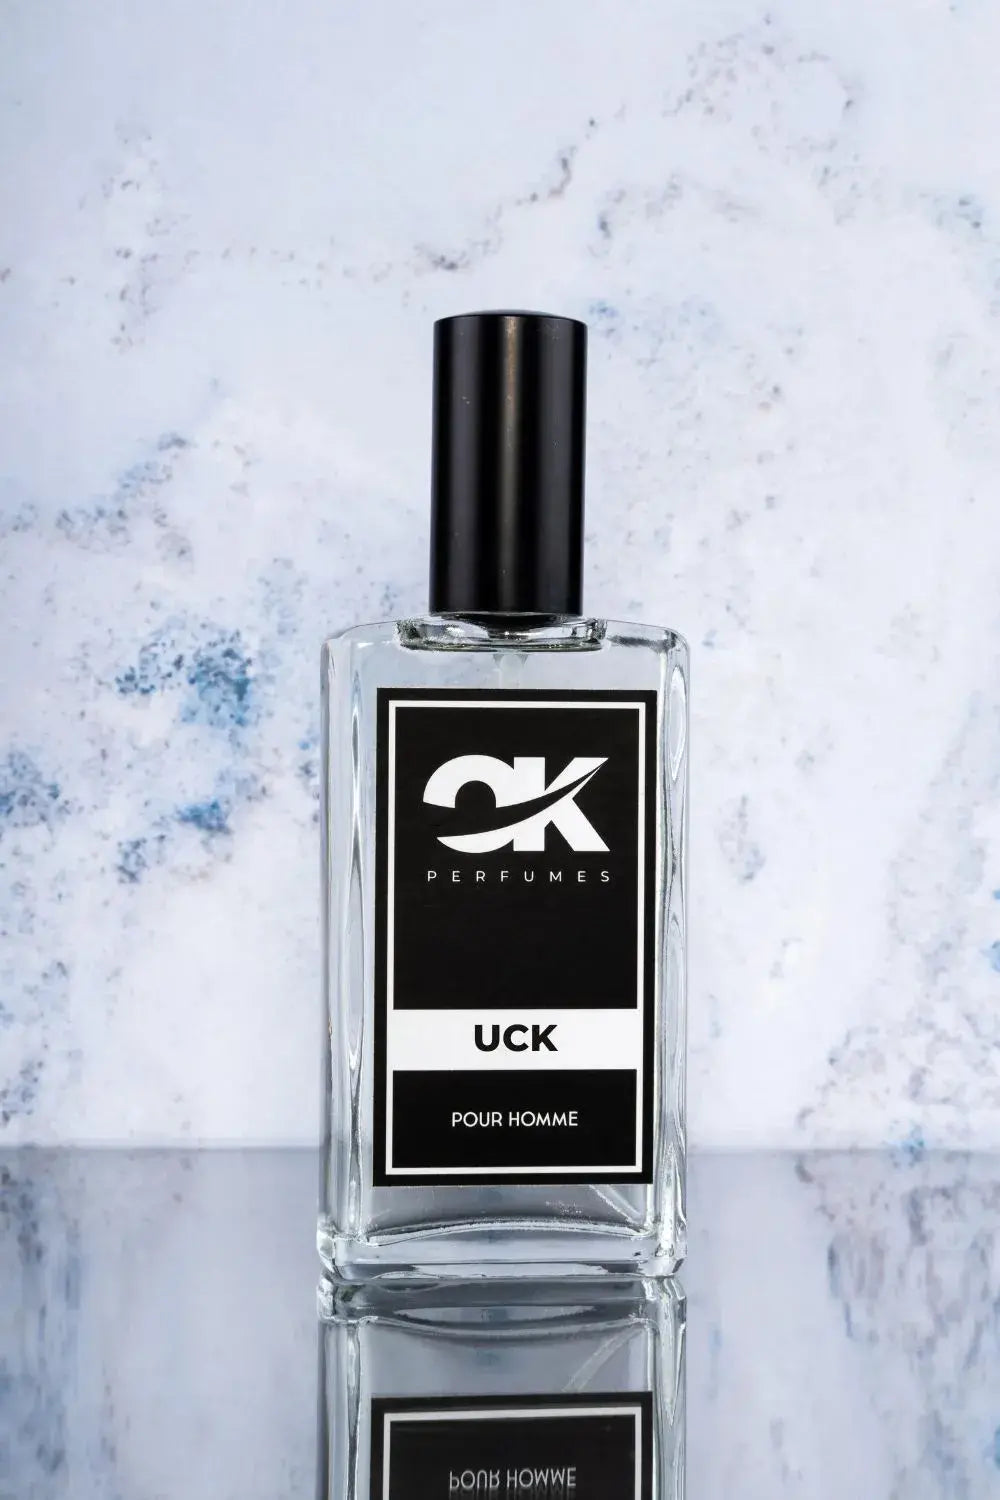 UCK - Lembre-se de CK ONE de Calvin Klein